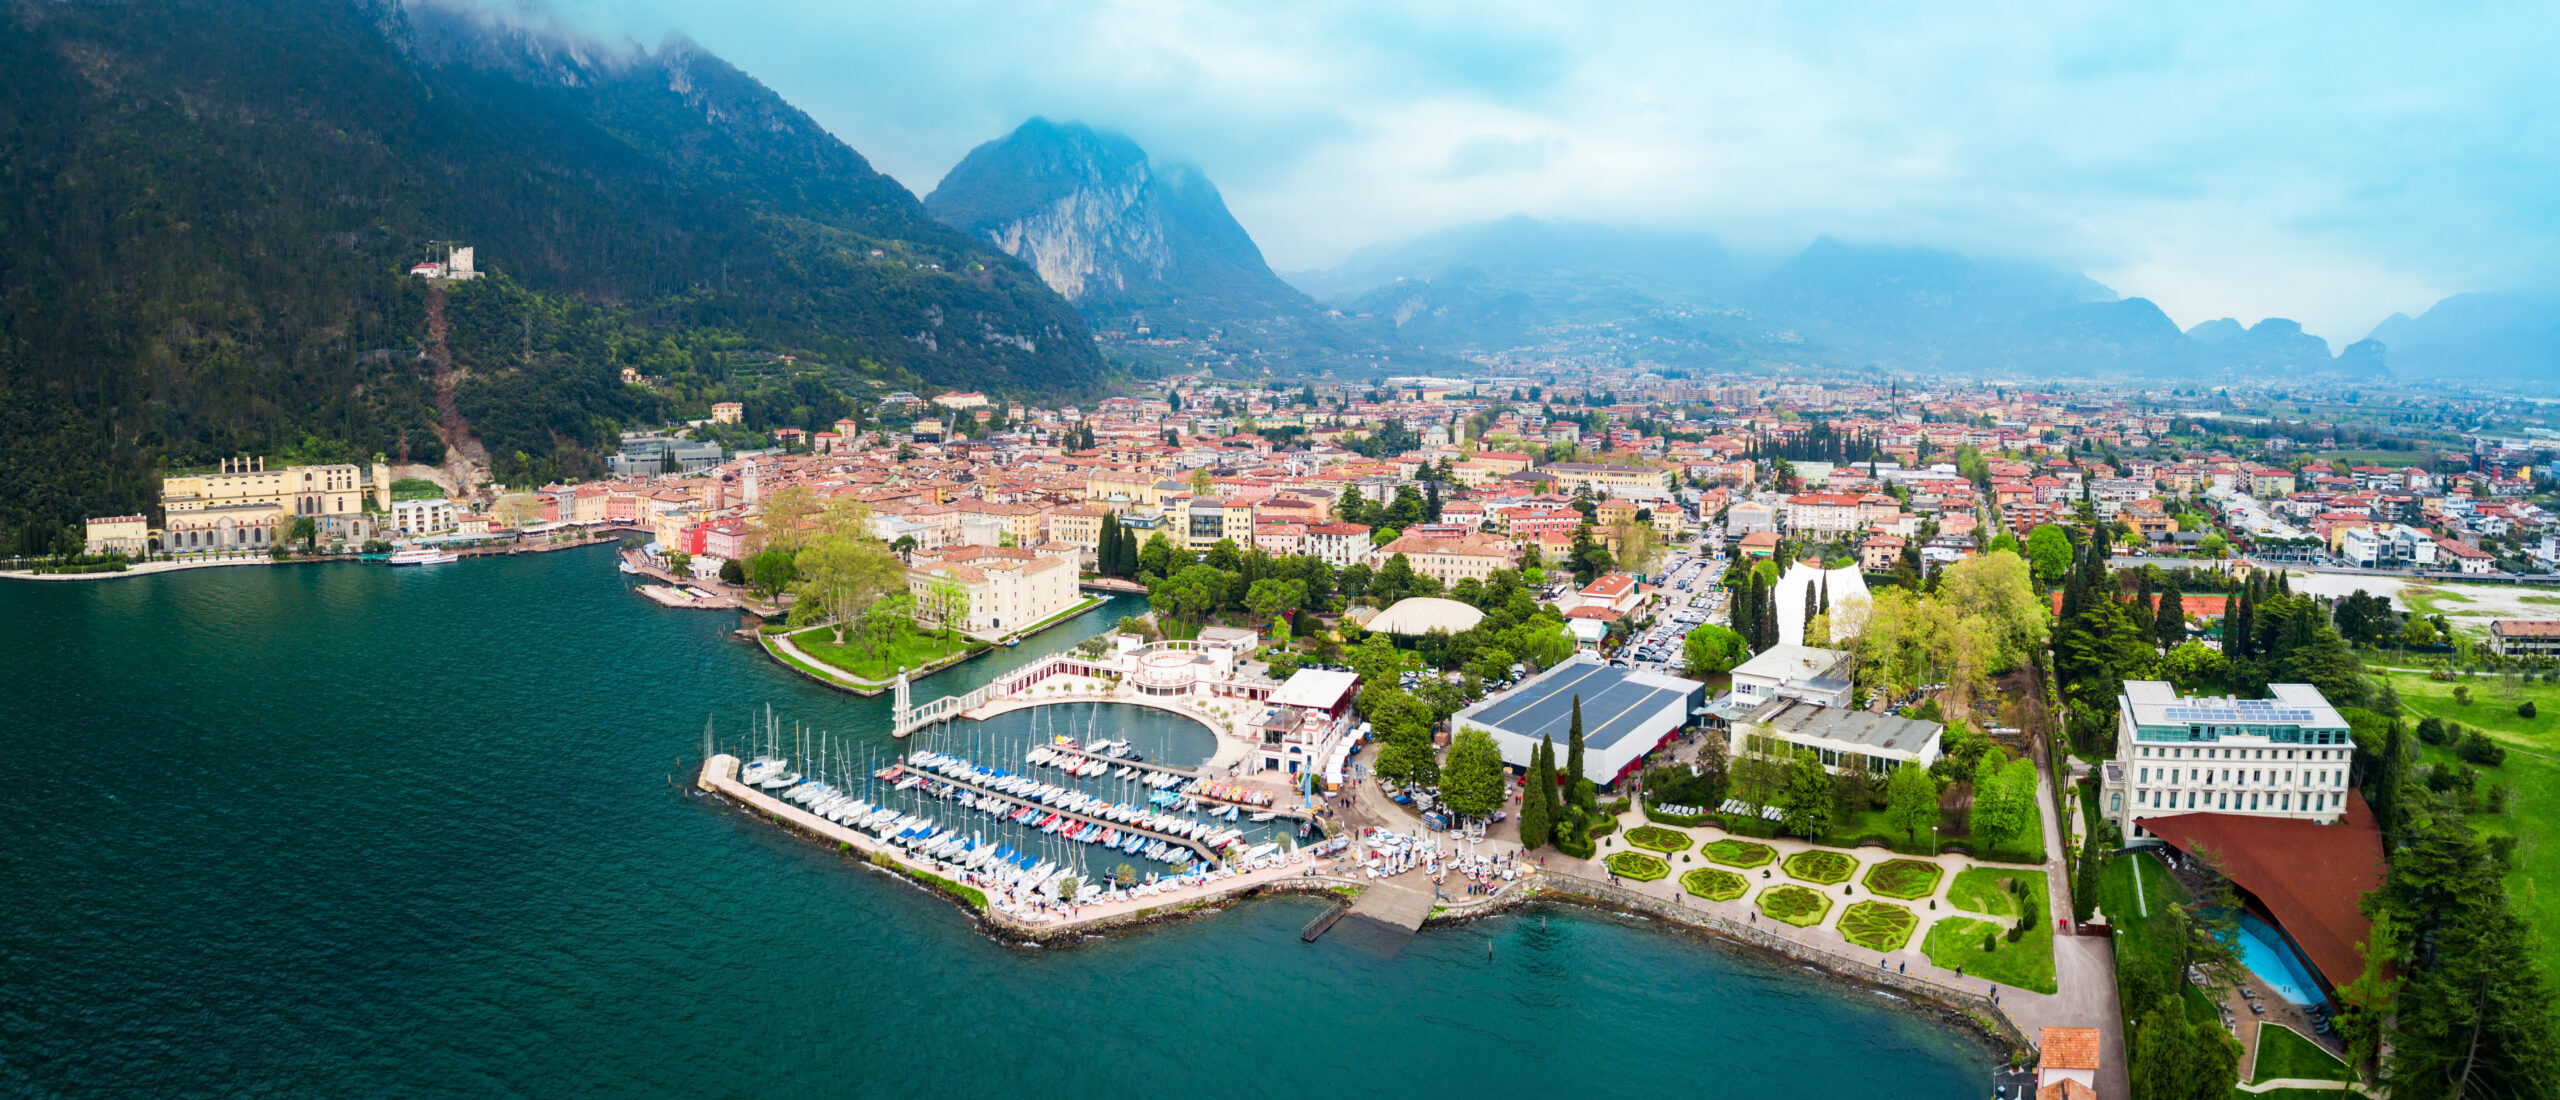 Hafen von Riva del Garda, Trentino in Italien.